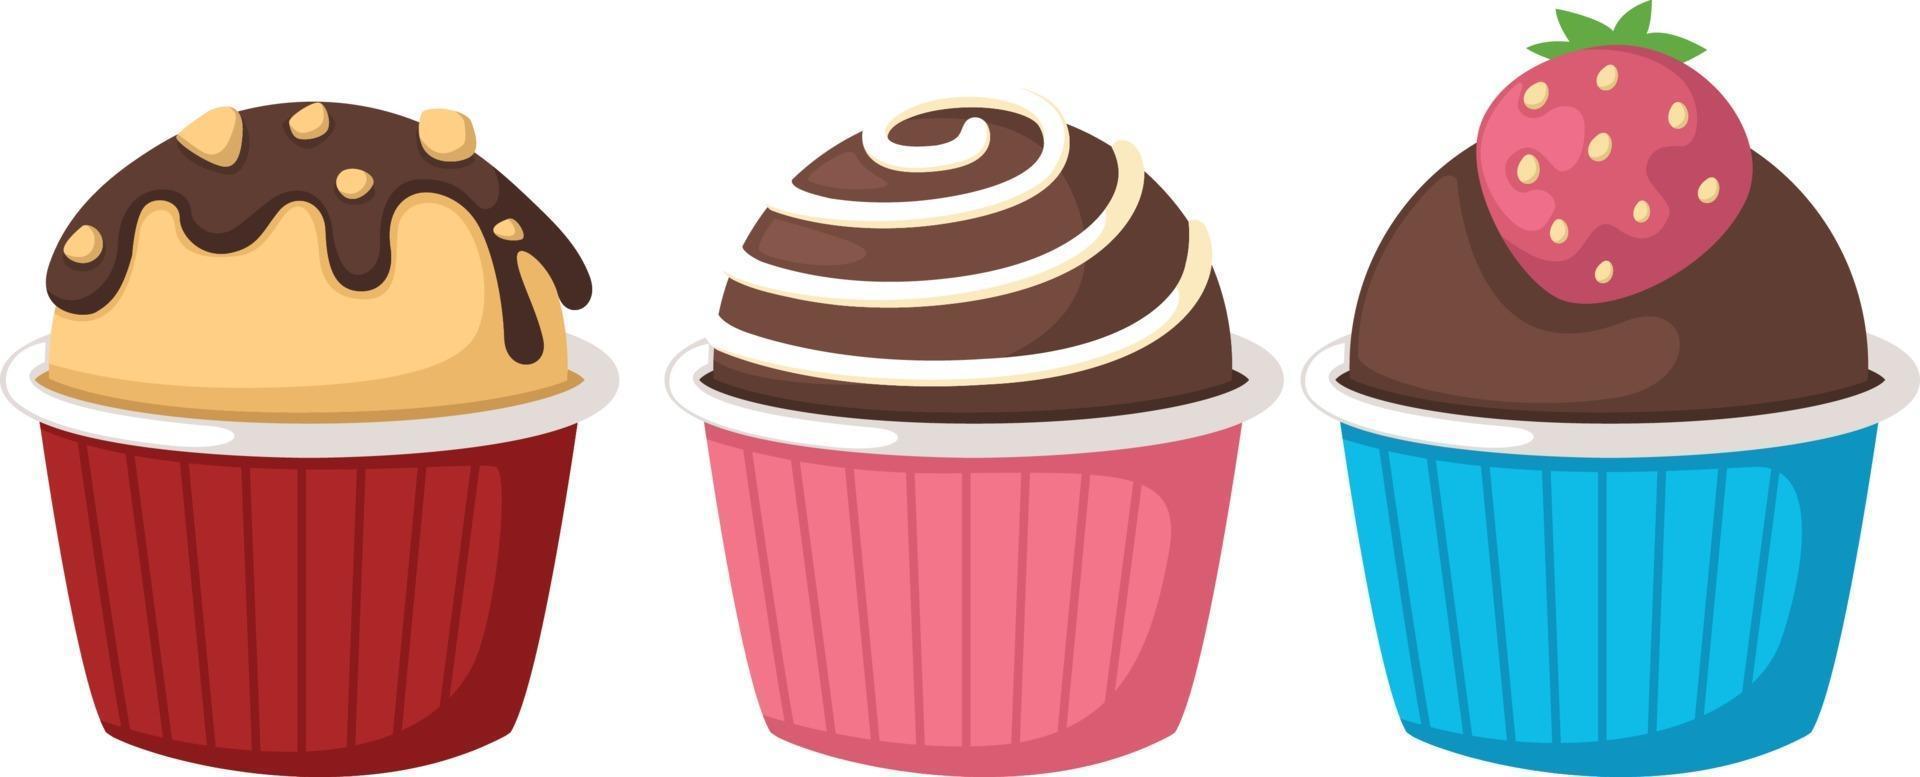 cupcake su sfondo bianco vettore